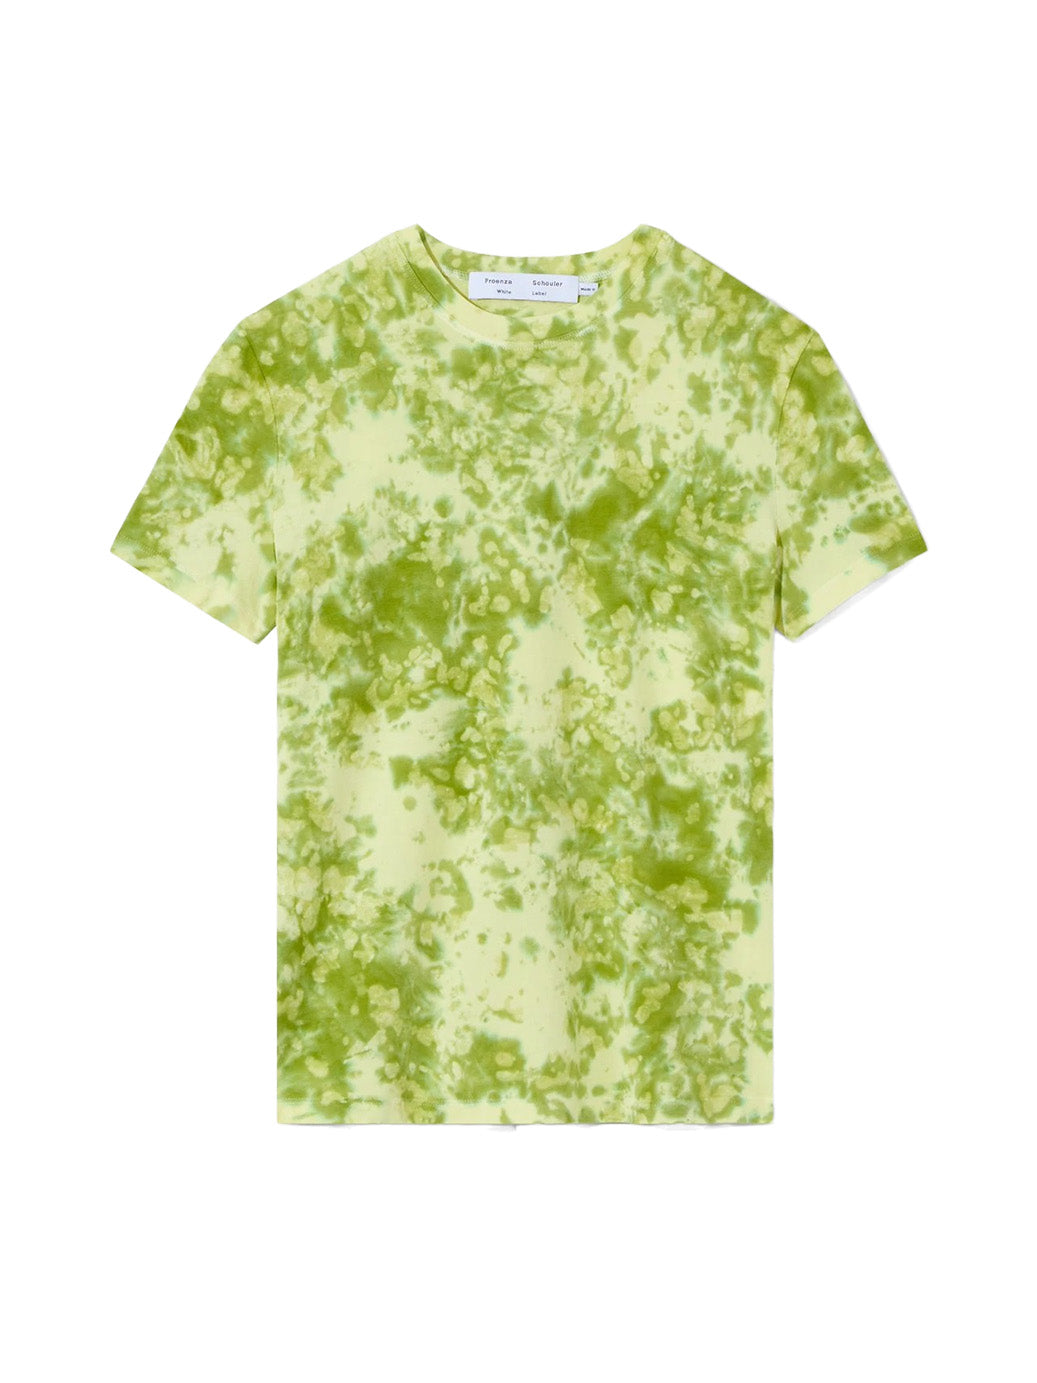 Tie Dye T-Shirt in Green/Citron